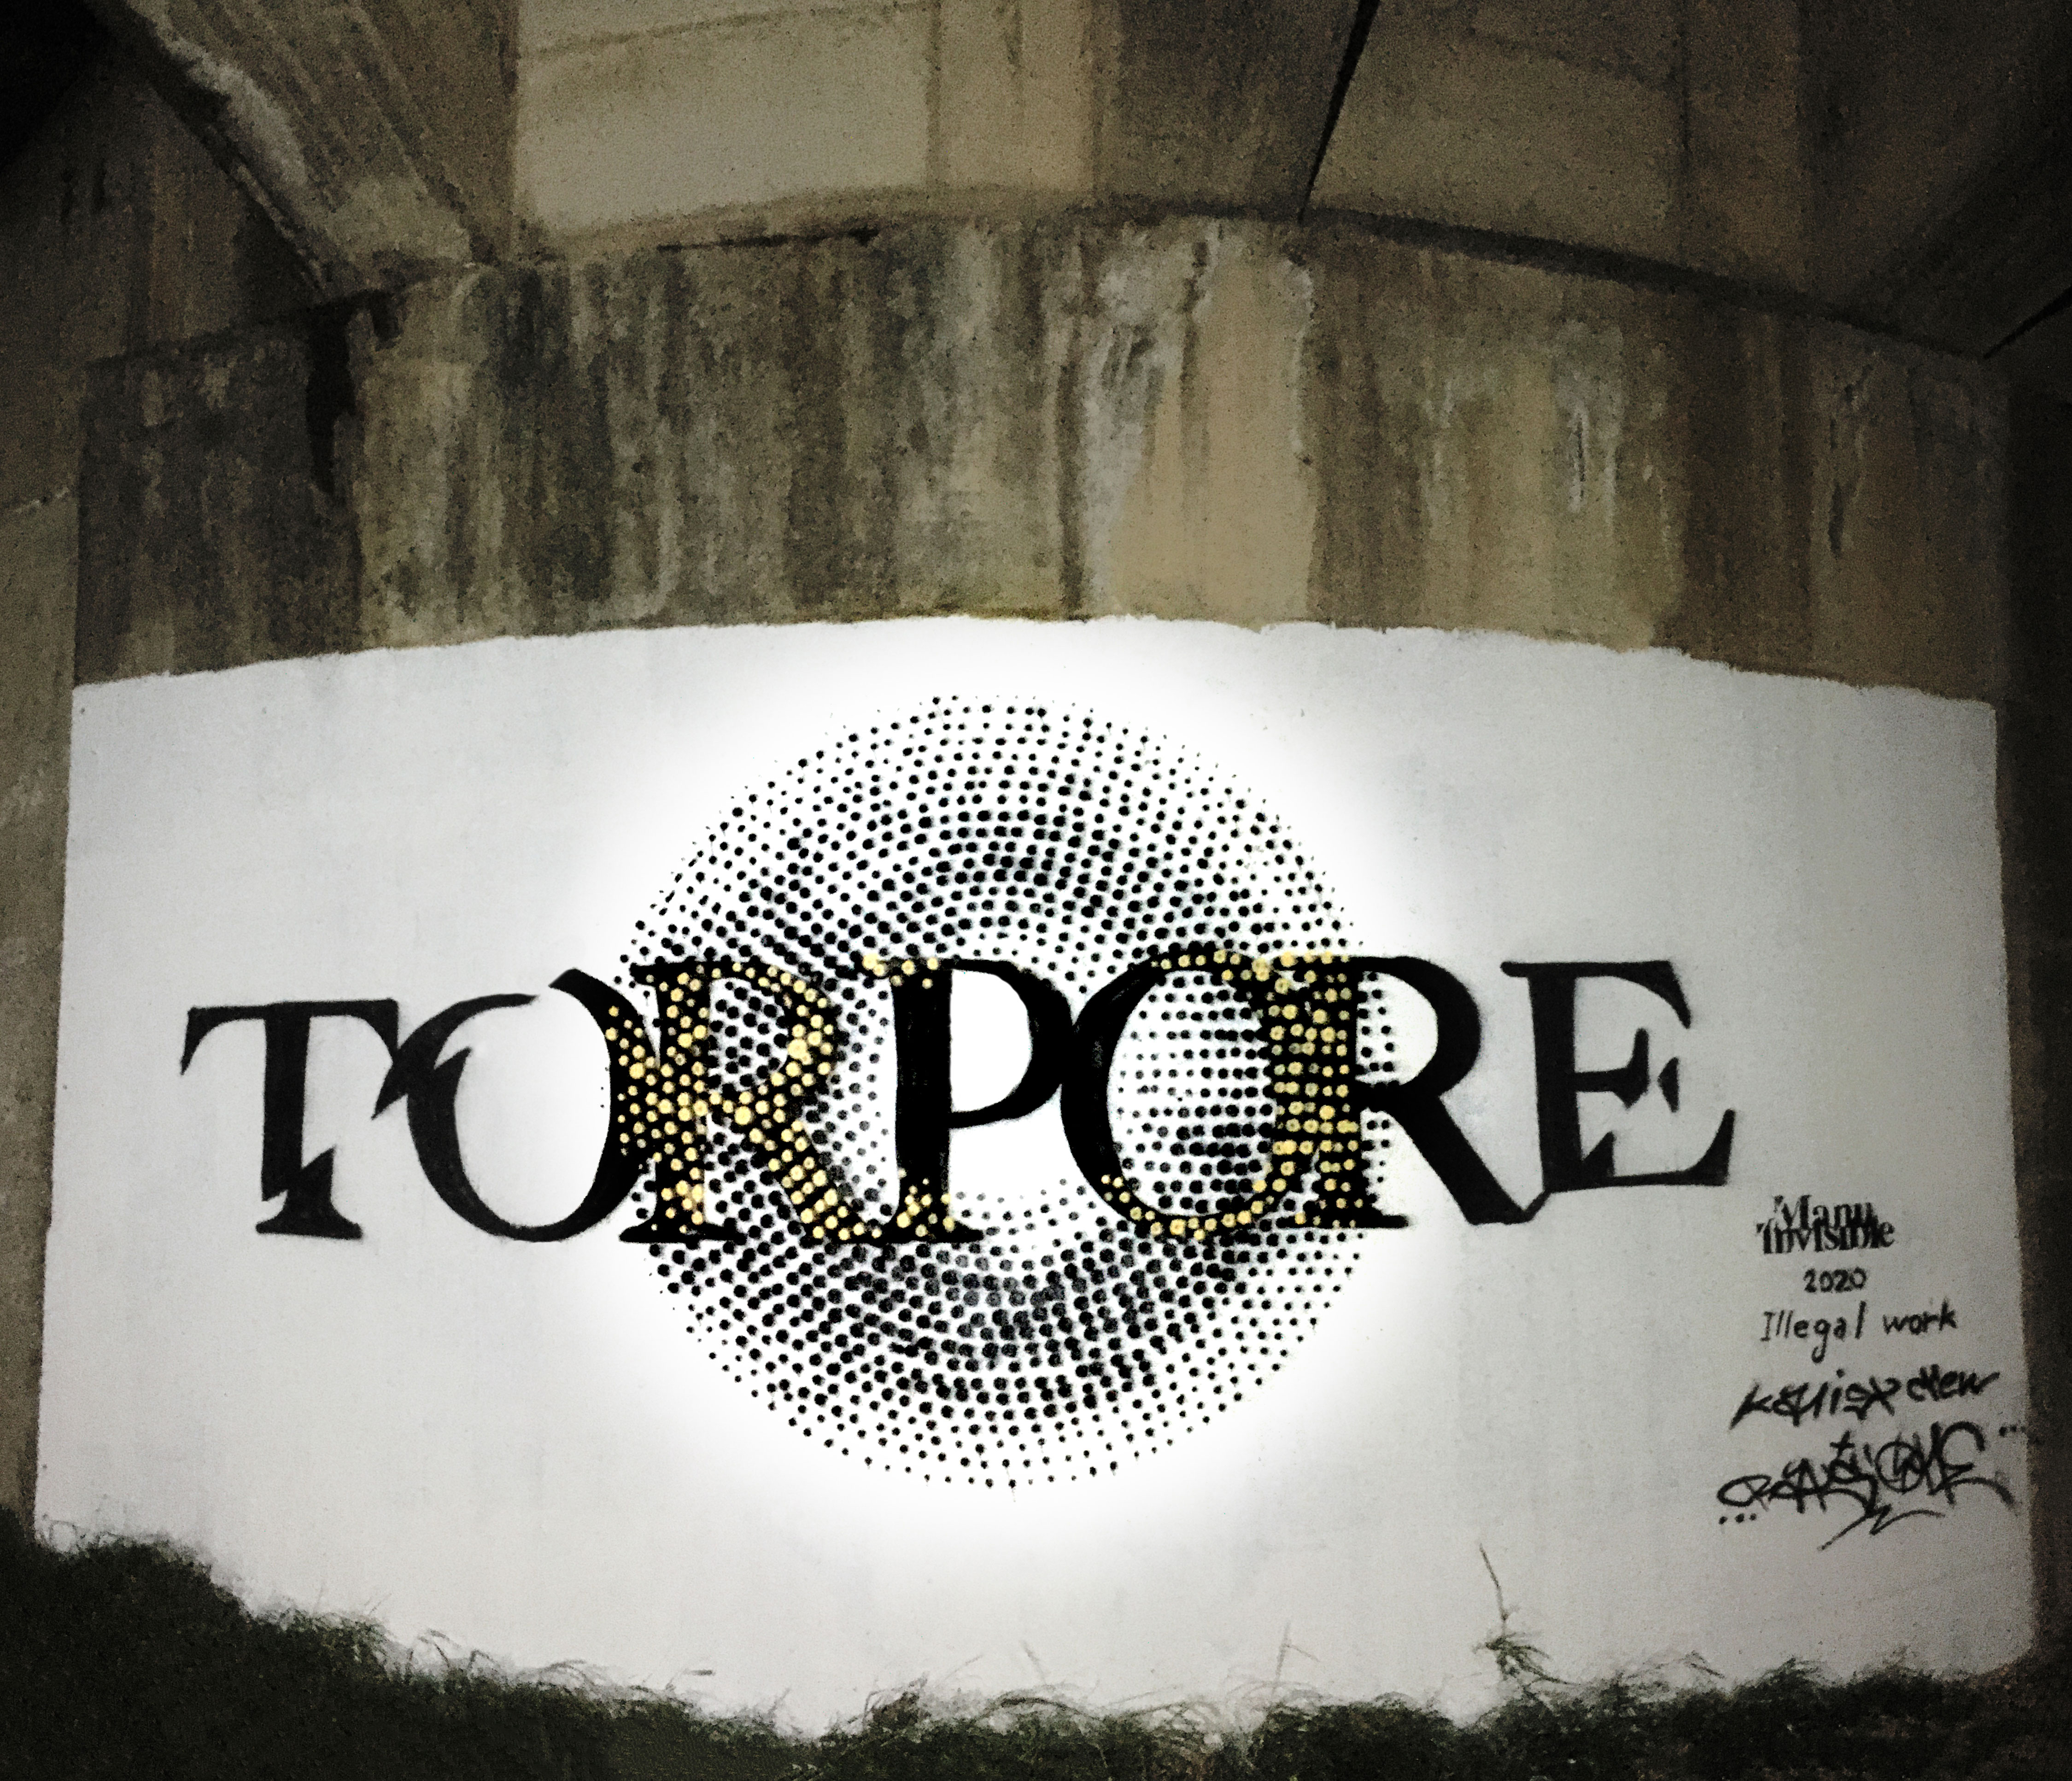 ''Torpore'' Quartz and spray paint on wall 8 x 4 m s.s. 131 Serrenti 2020